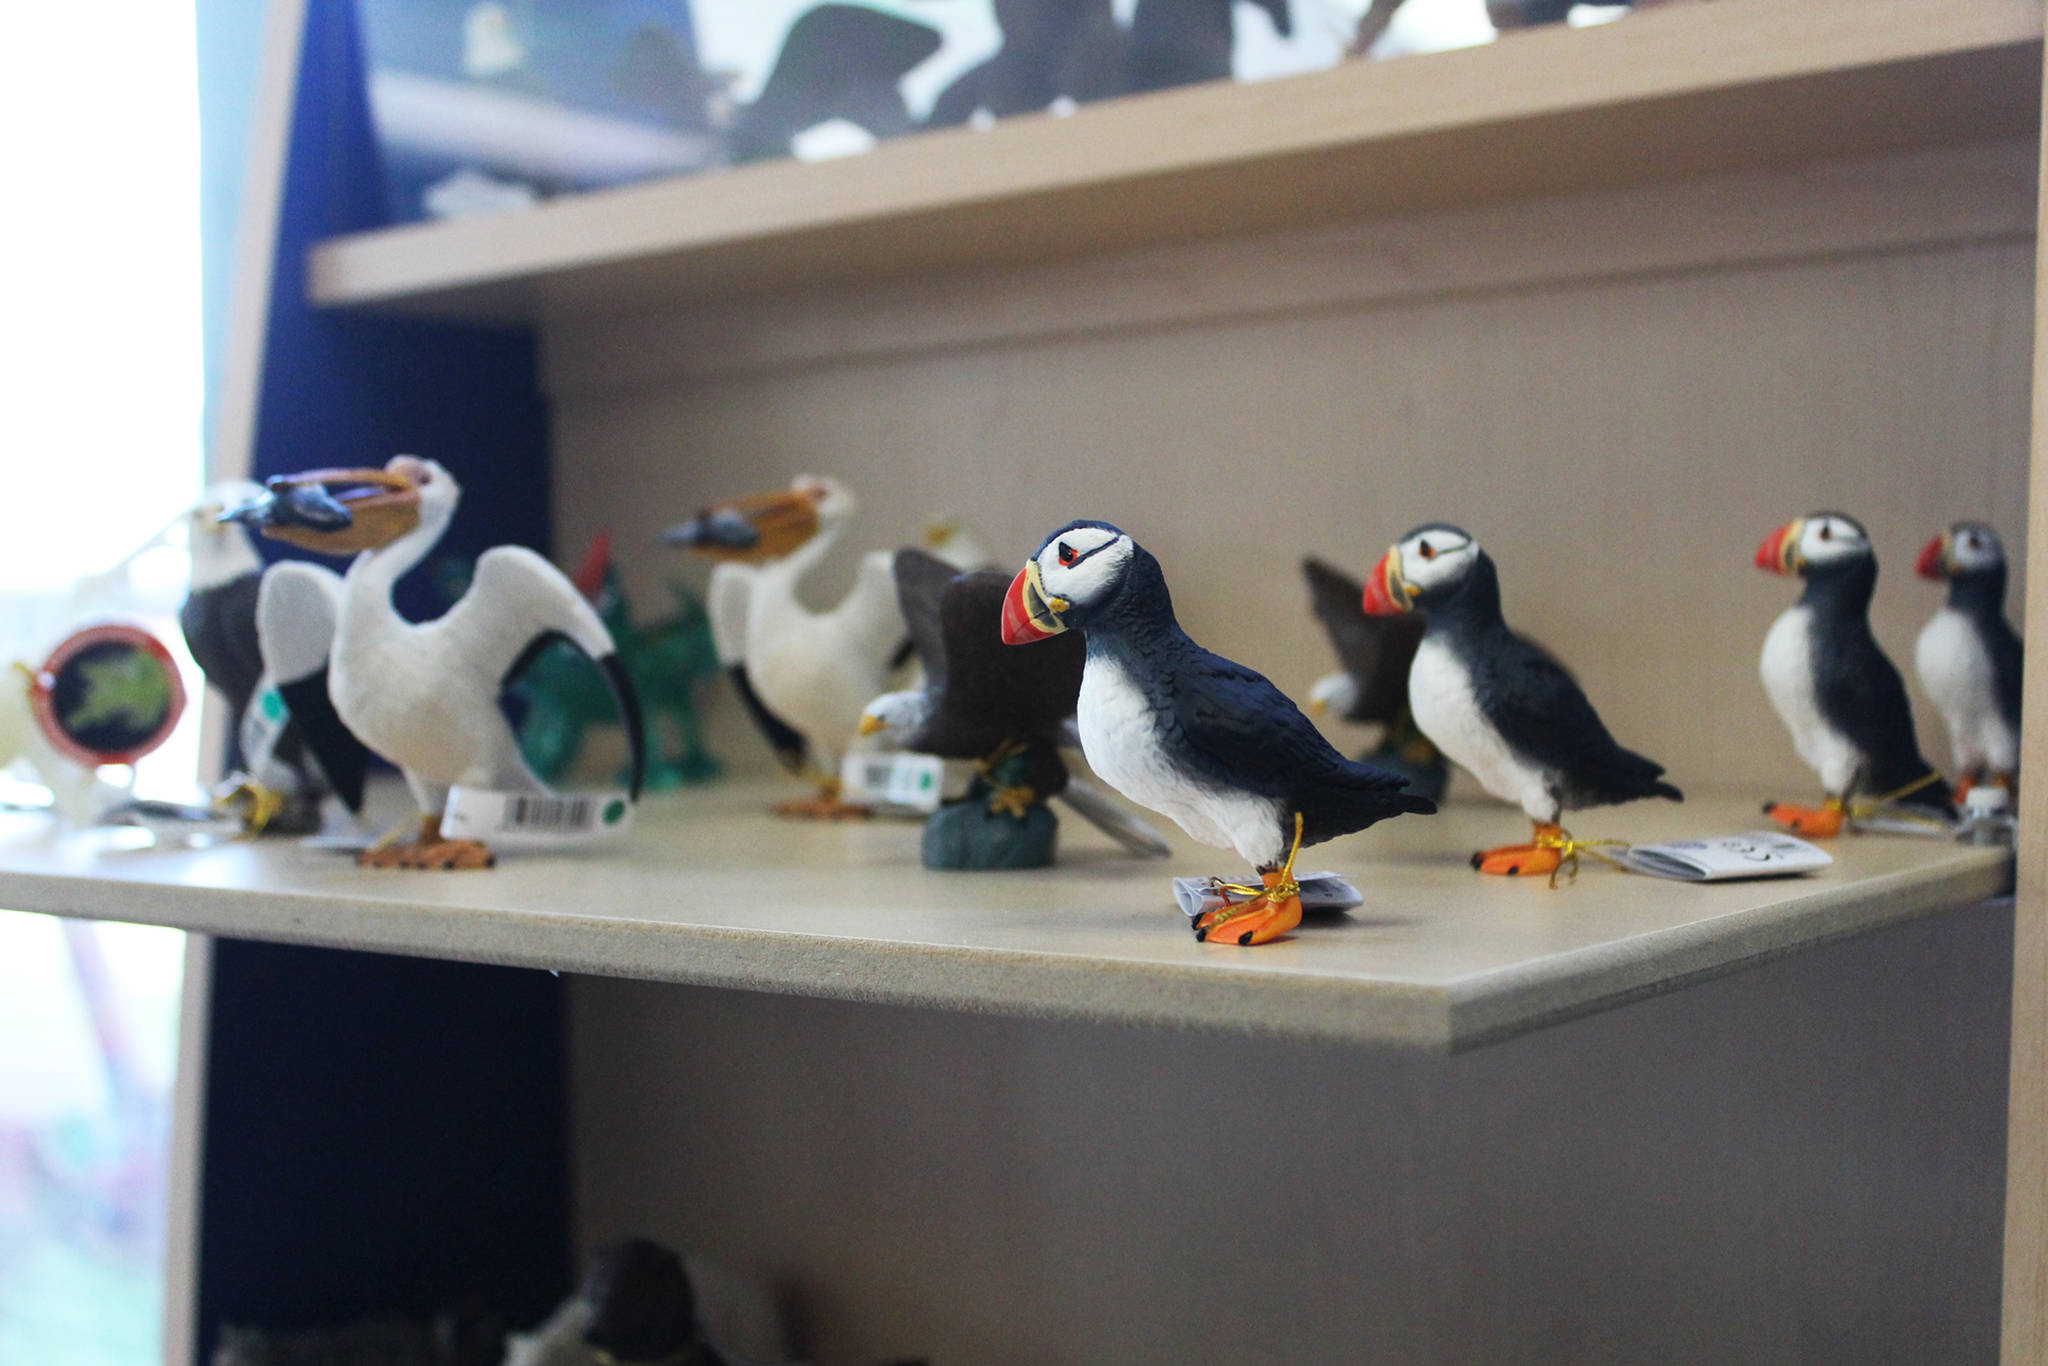 An assortment of bird figurines rest on a shelf Thursday, June 7, 2018 at Captain’s Toy Chest in Homer, Alaska. (Photo by Megan Pacer/Homer News)